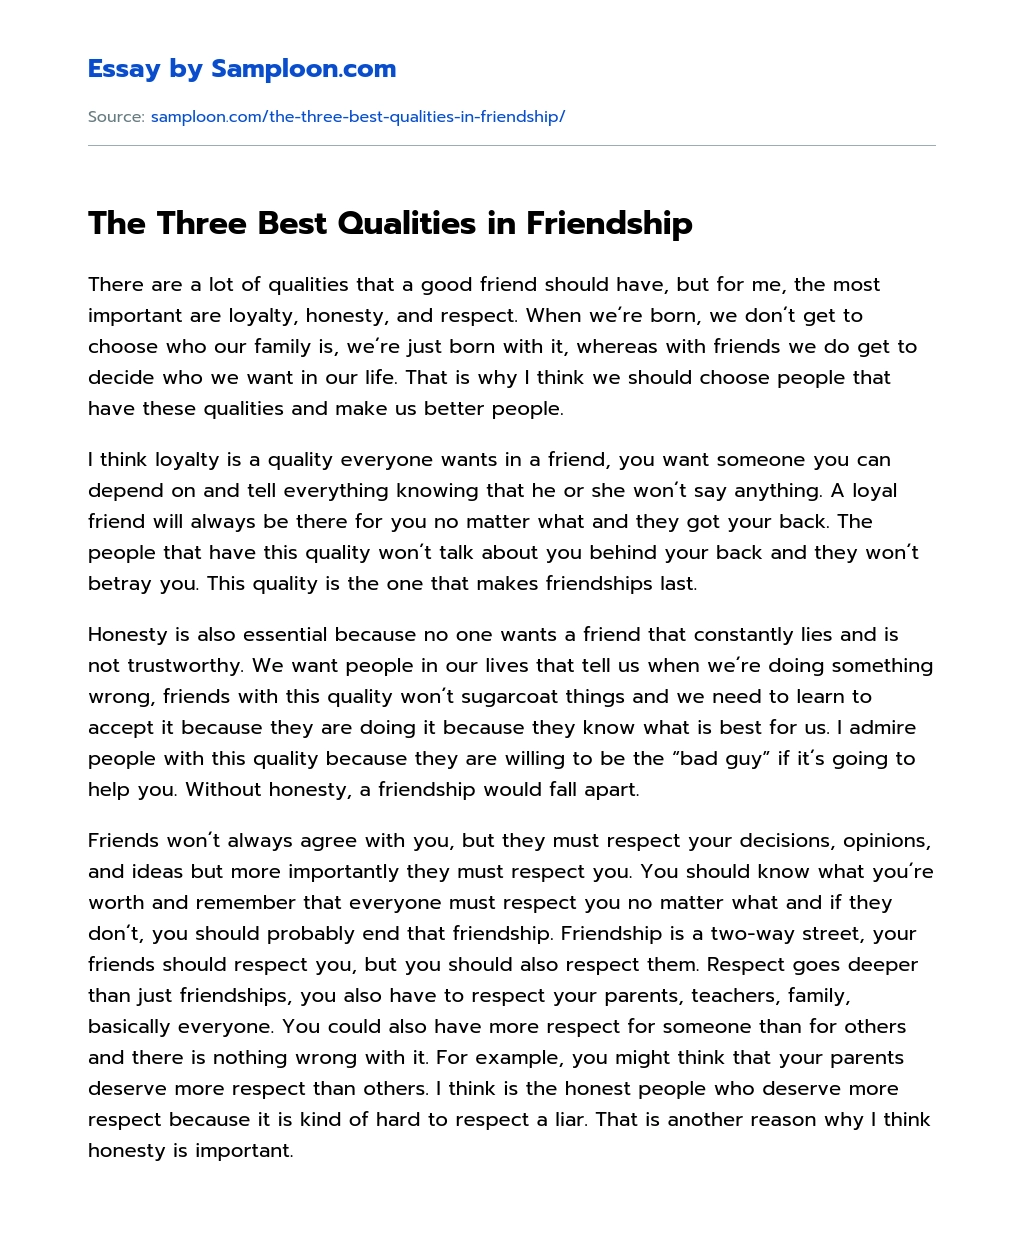 The Three Best Qualities in Friendship essay